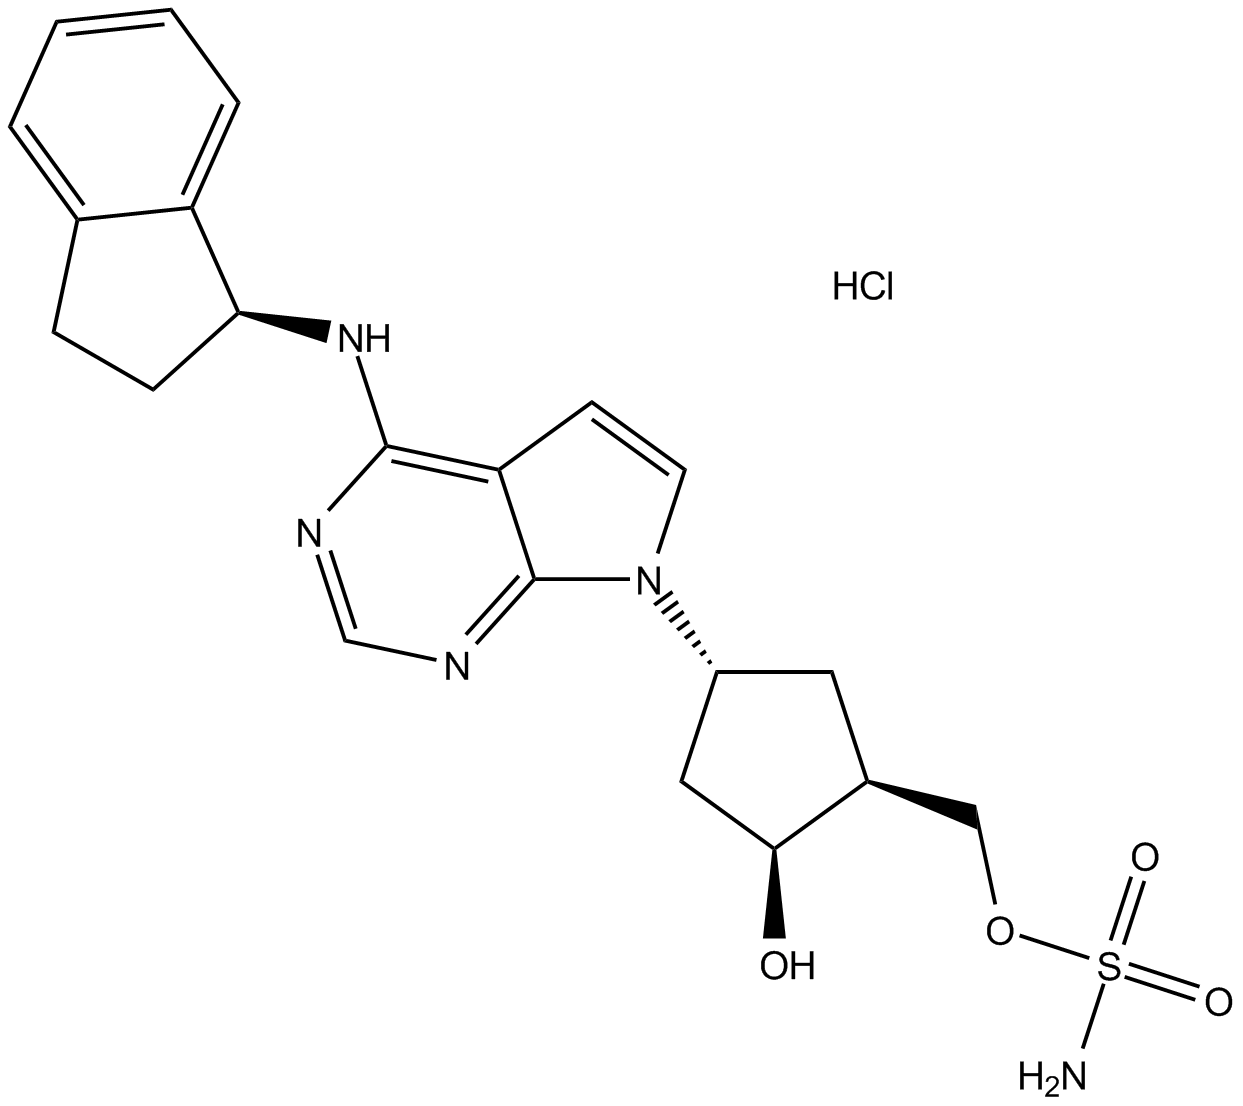 MLN4924 HCl salt  Chemical Structure